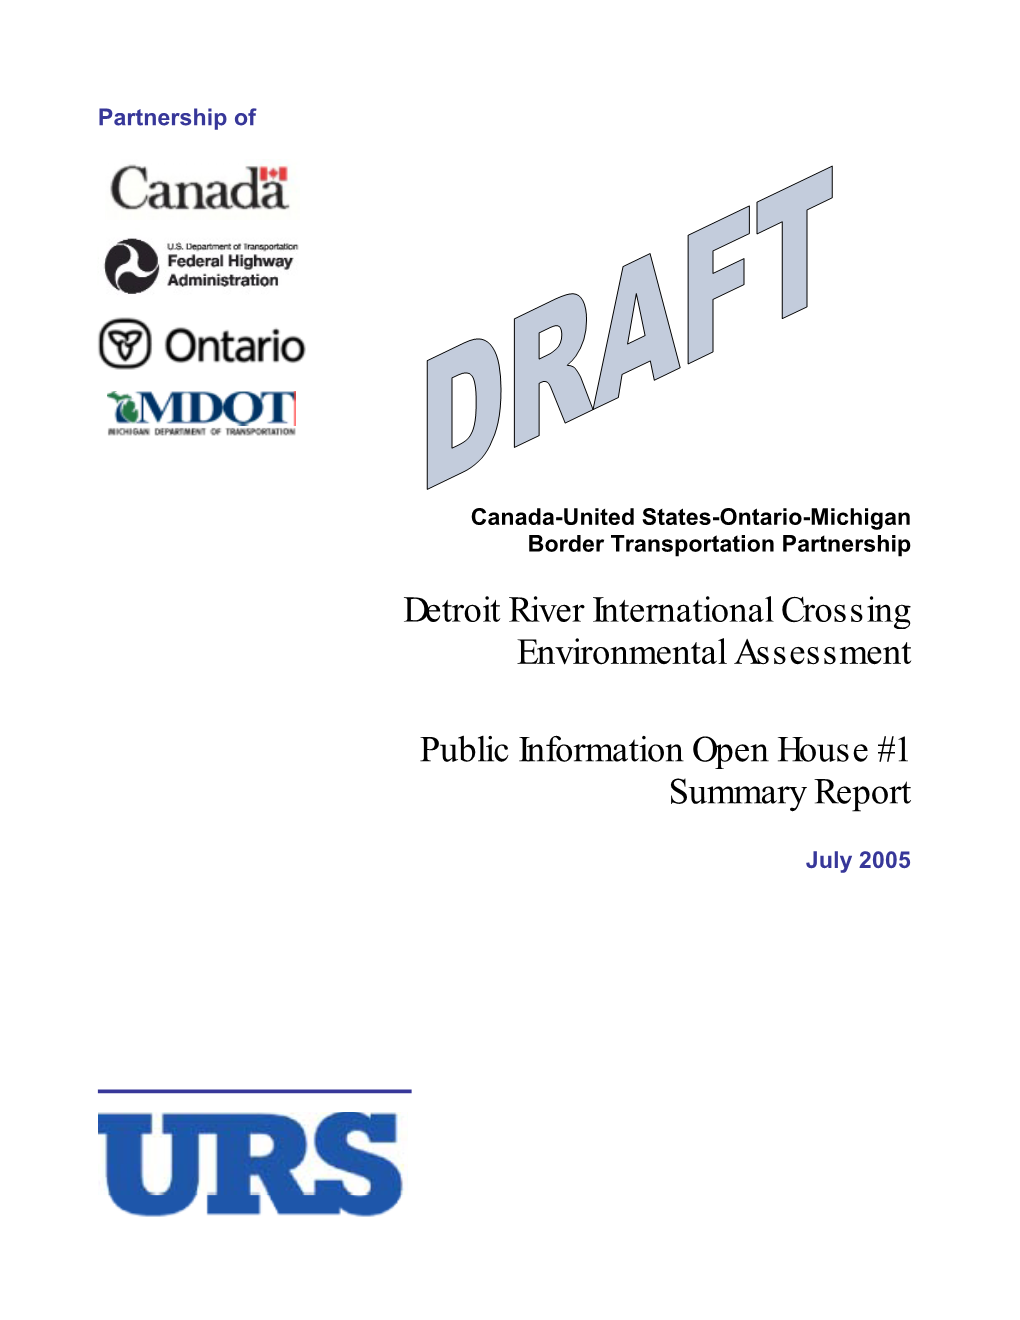 Detroit River International Crossing Environmental Assessment Public Information Open House #1 Summary Report